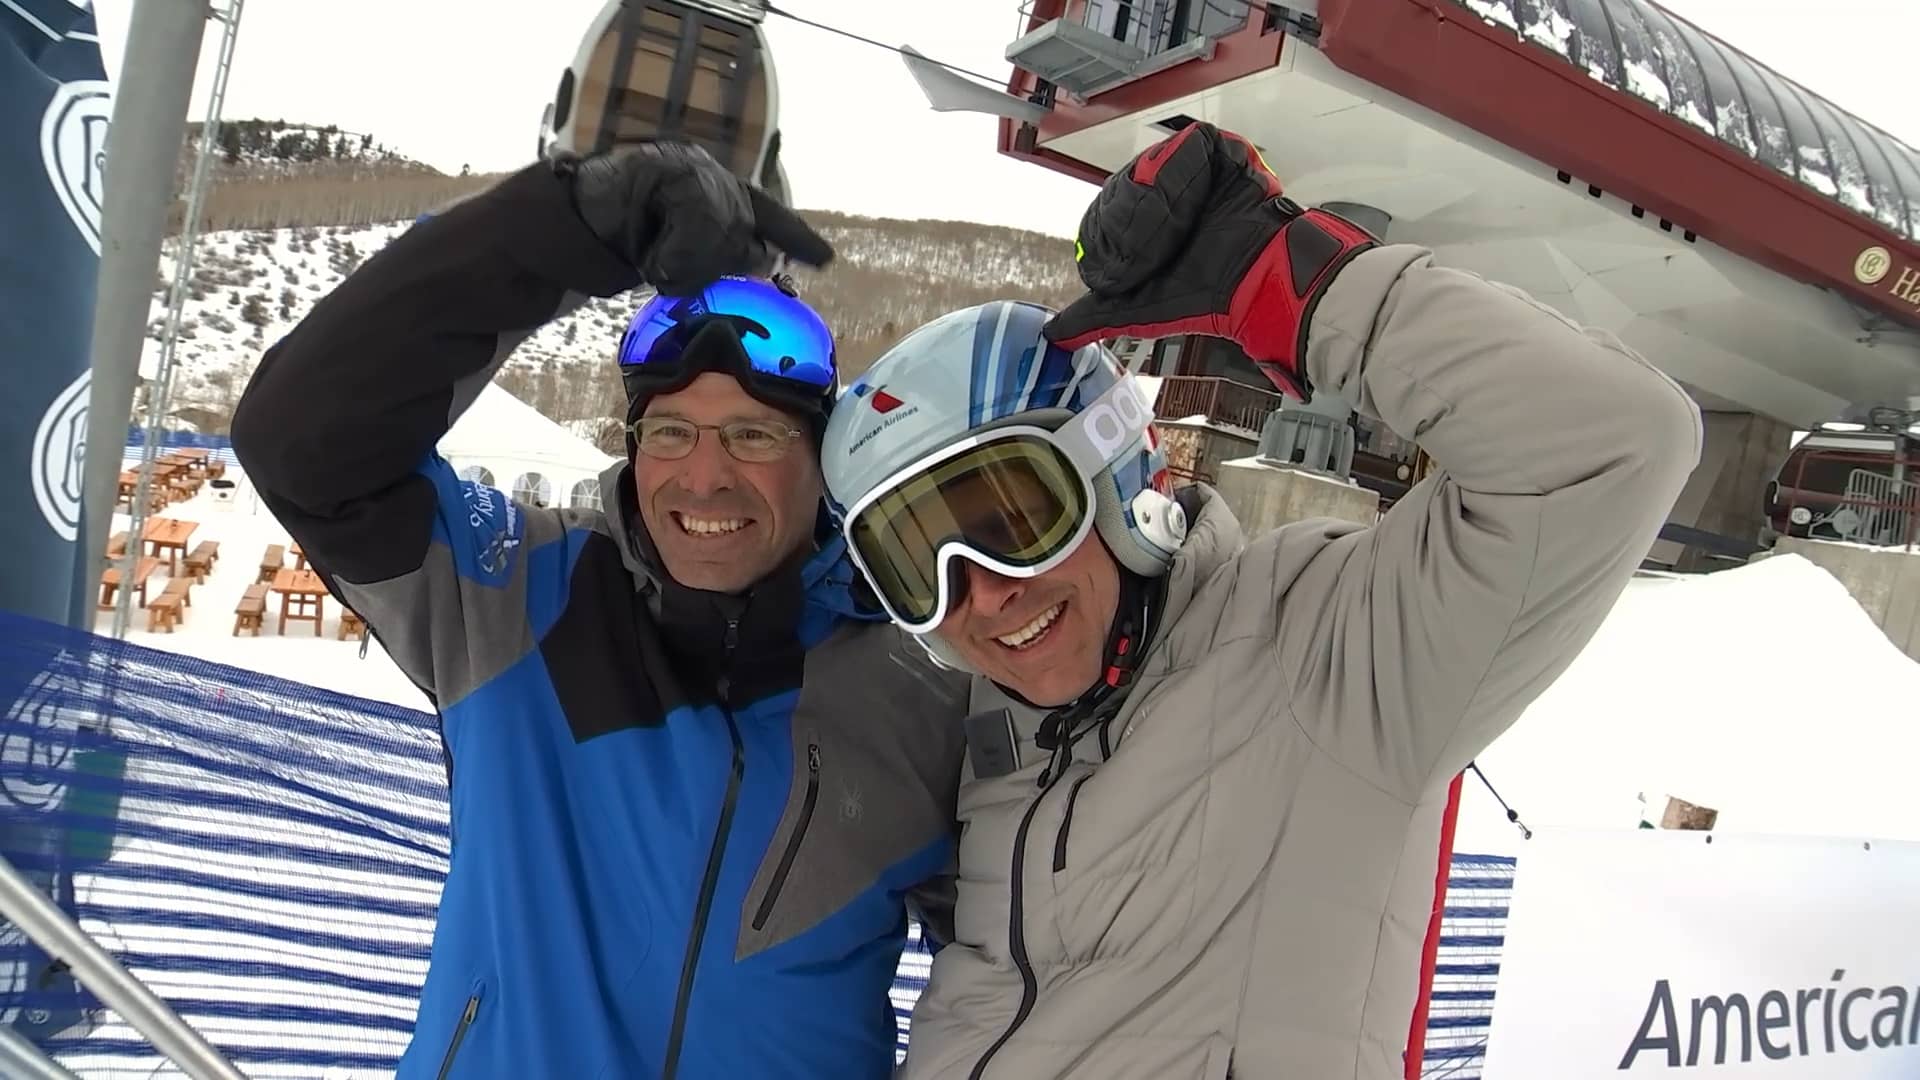 American Airlines Celebrity Ski Weekend on Vimeo